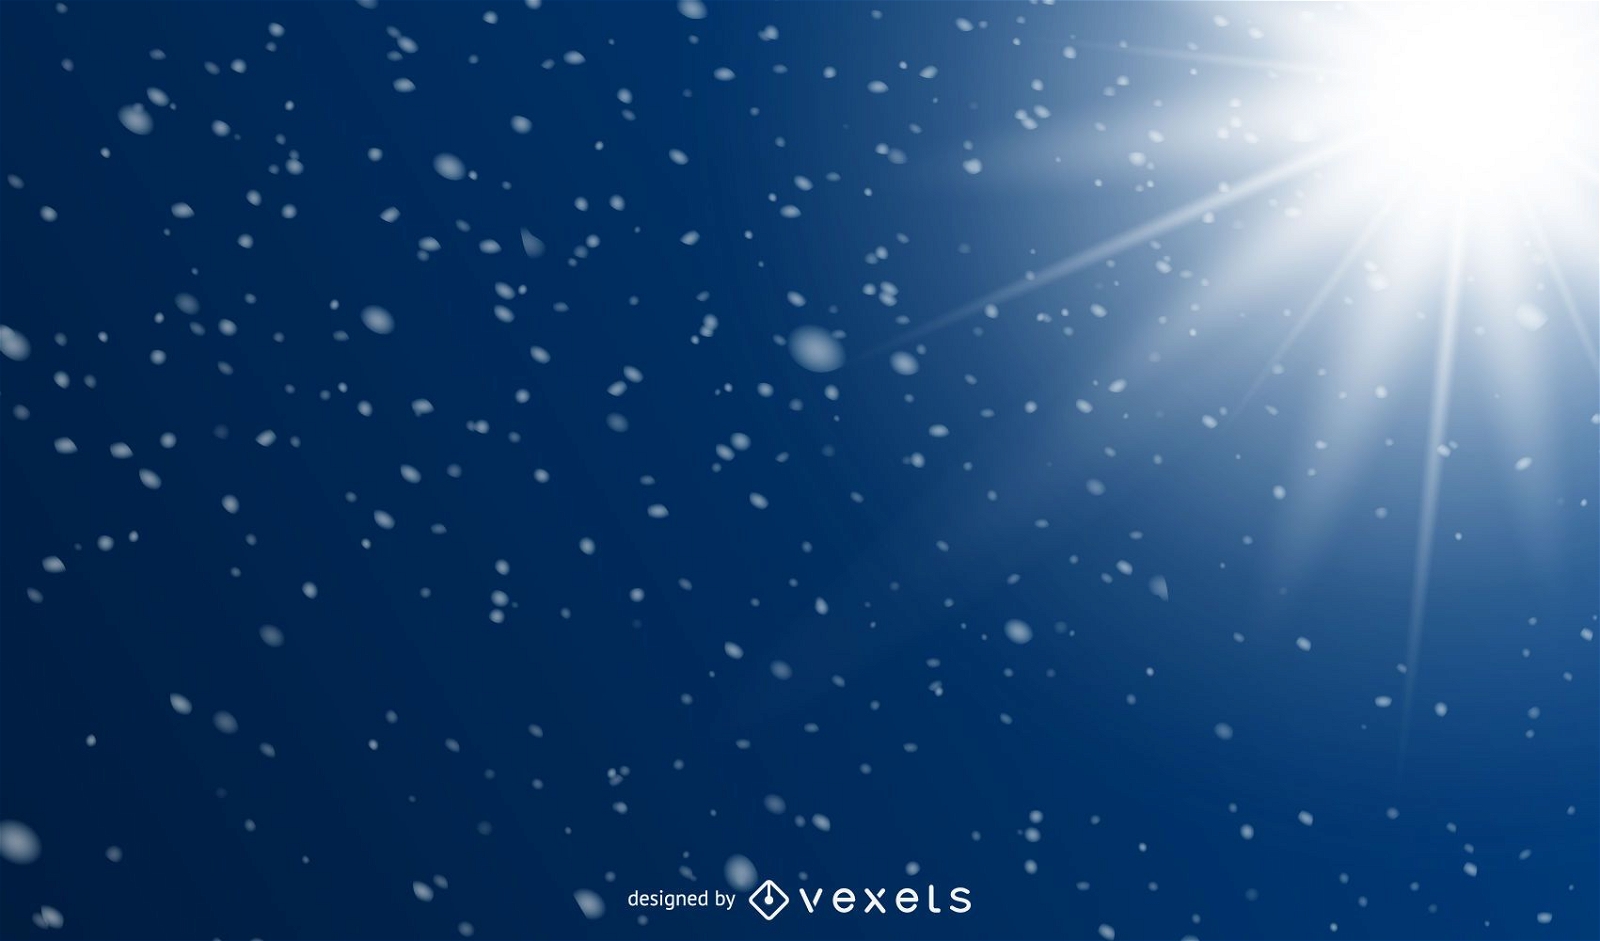 Sun Glares & Snowy Sparkles Blue Background